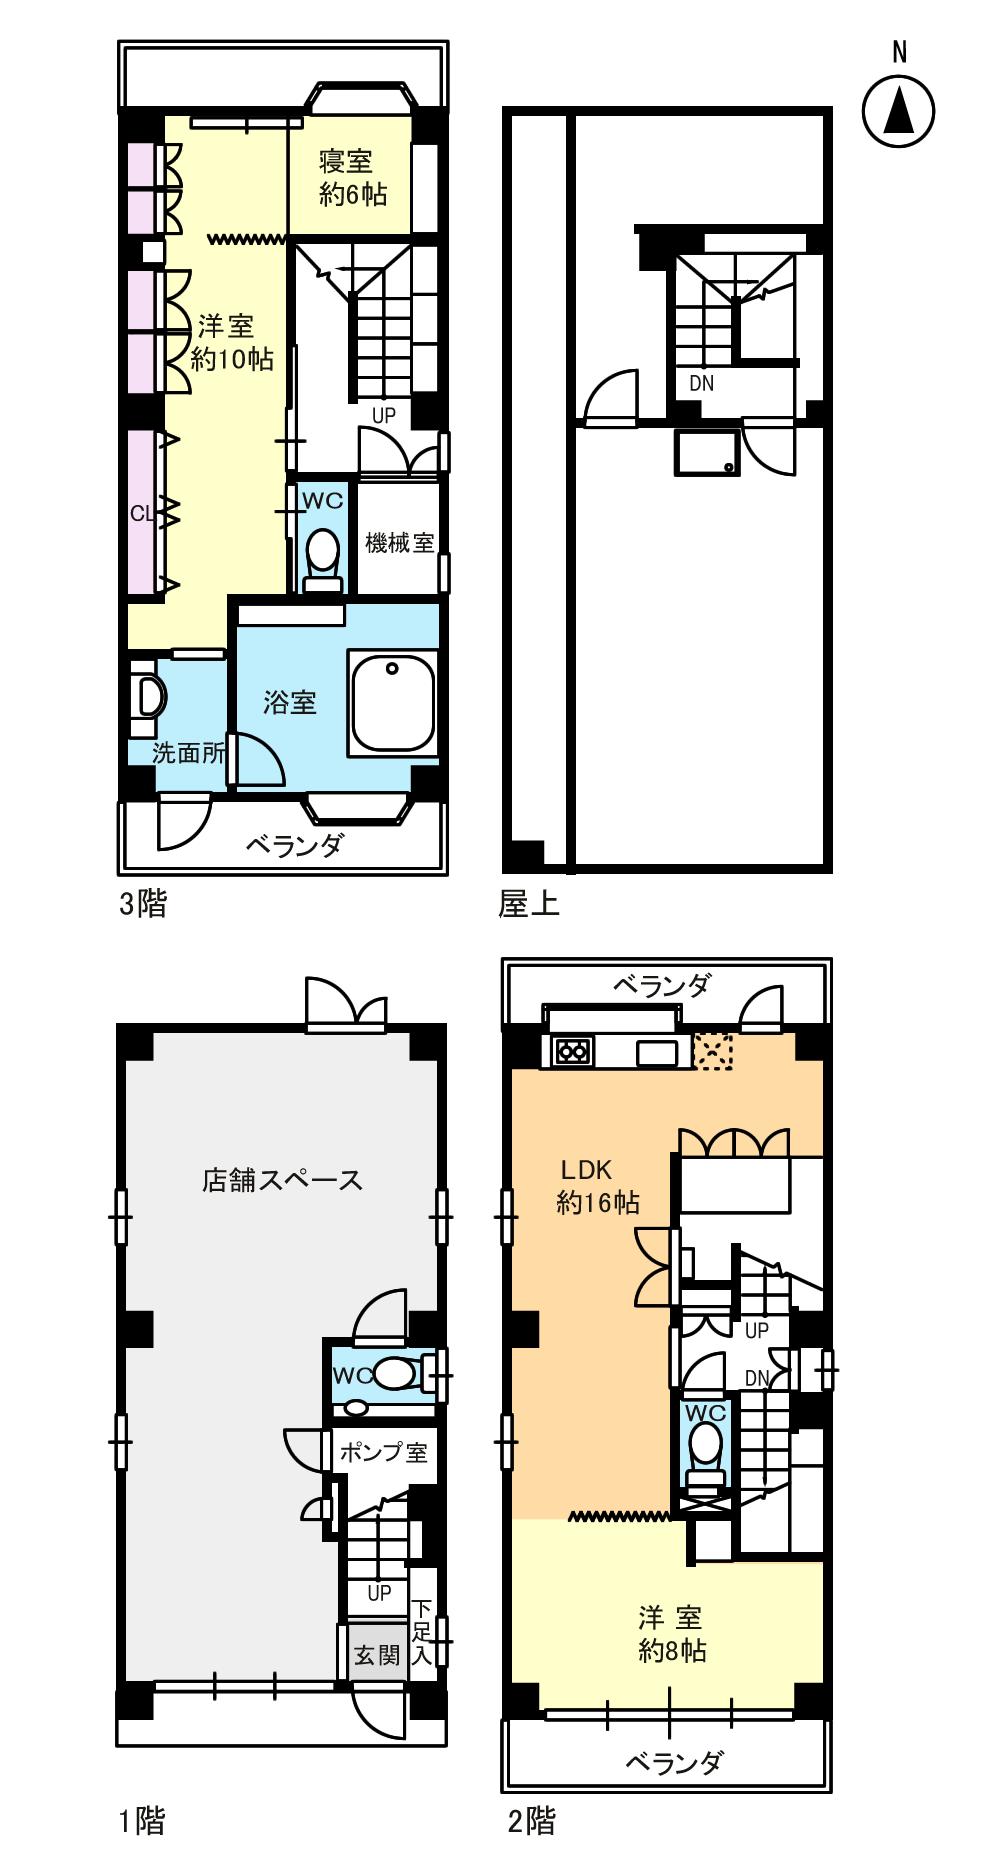 Floor plan. 28.8 million yen, 3LDK + S (storeroom), Land area 108 sq m , Building area 185.53 sq m